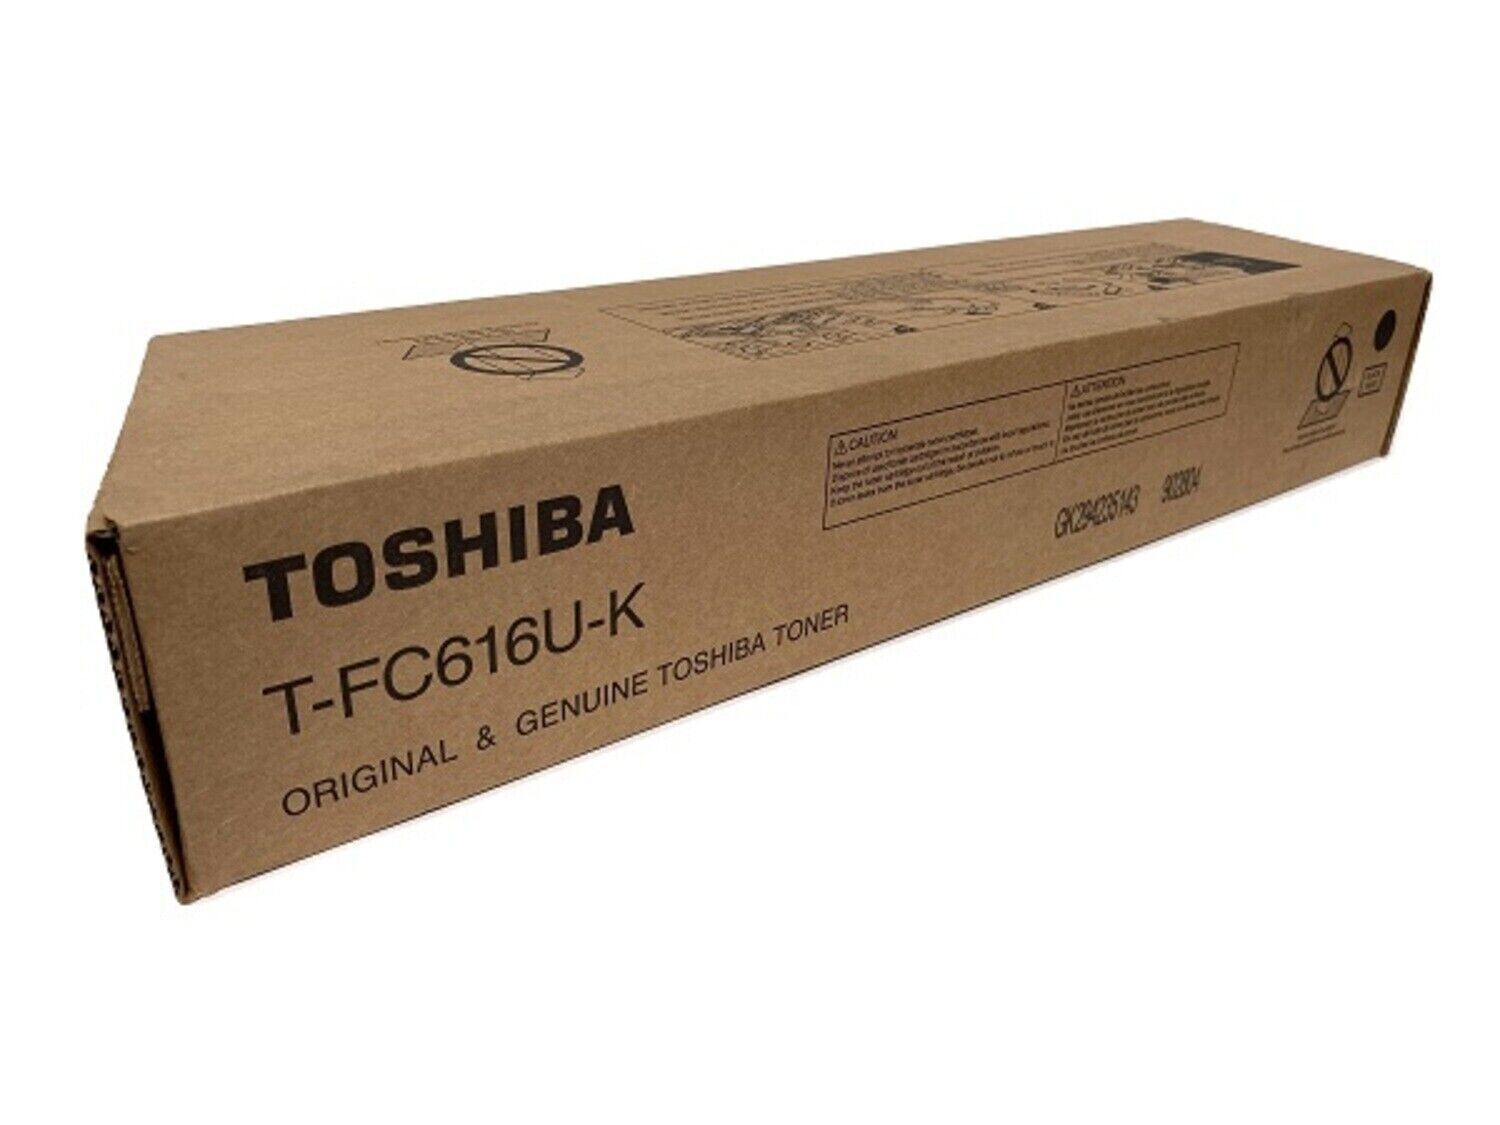 Genuine Toshiba T-FC616U-K Black Toner Cartridge **NEW SEALED - **